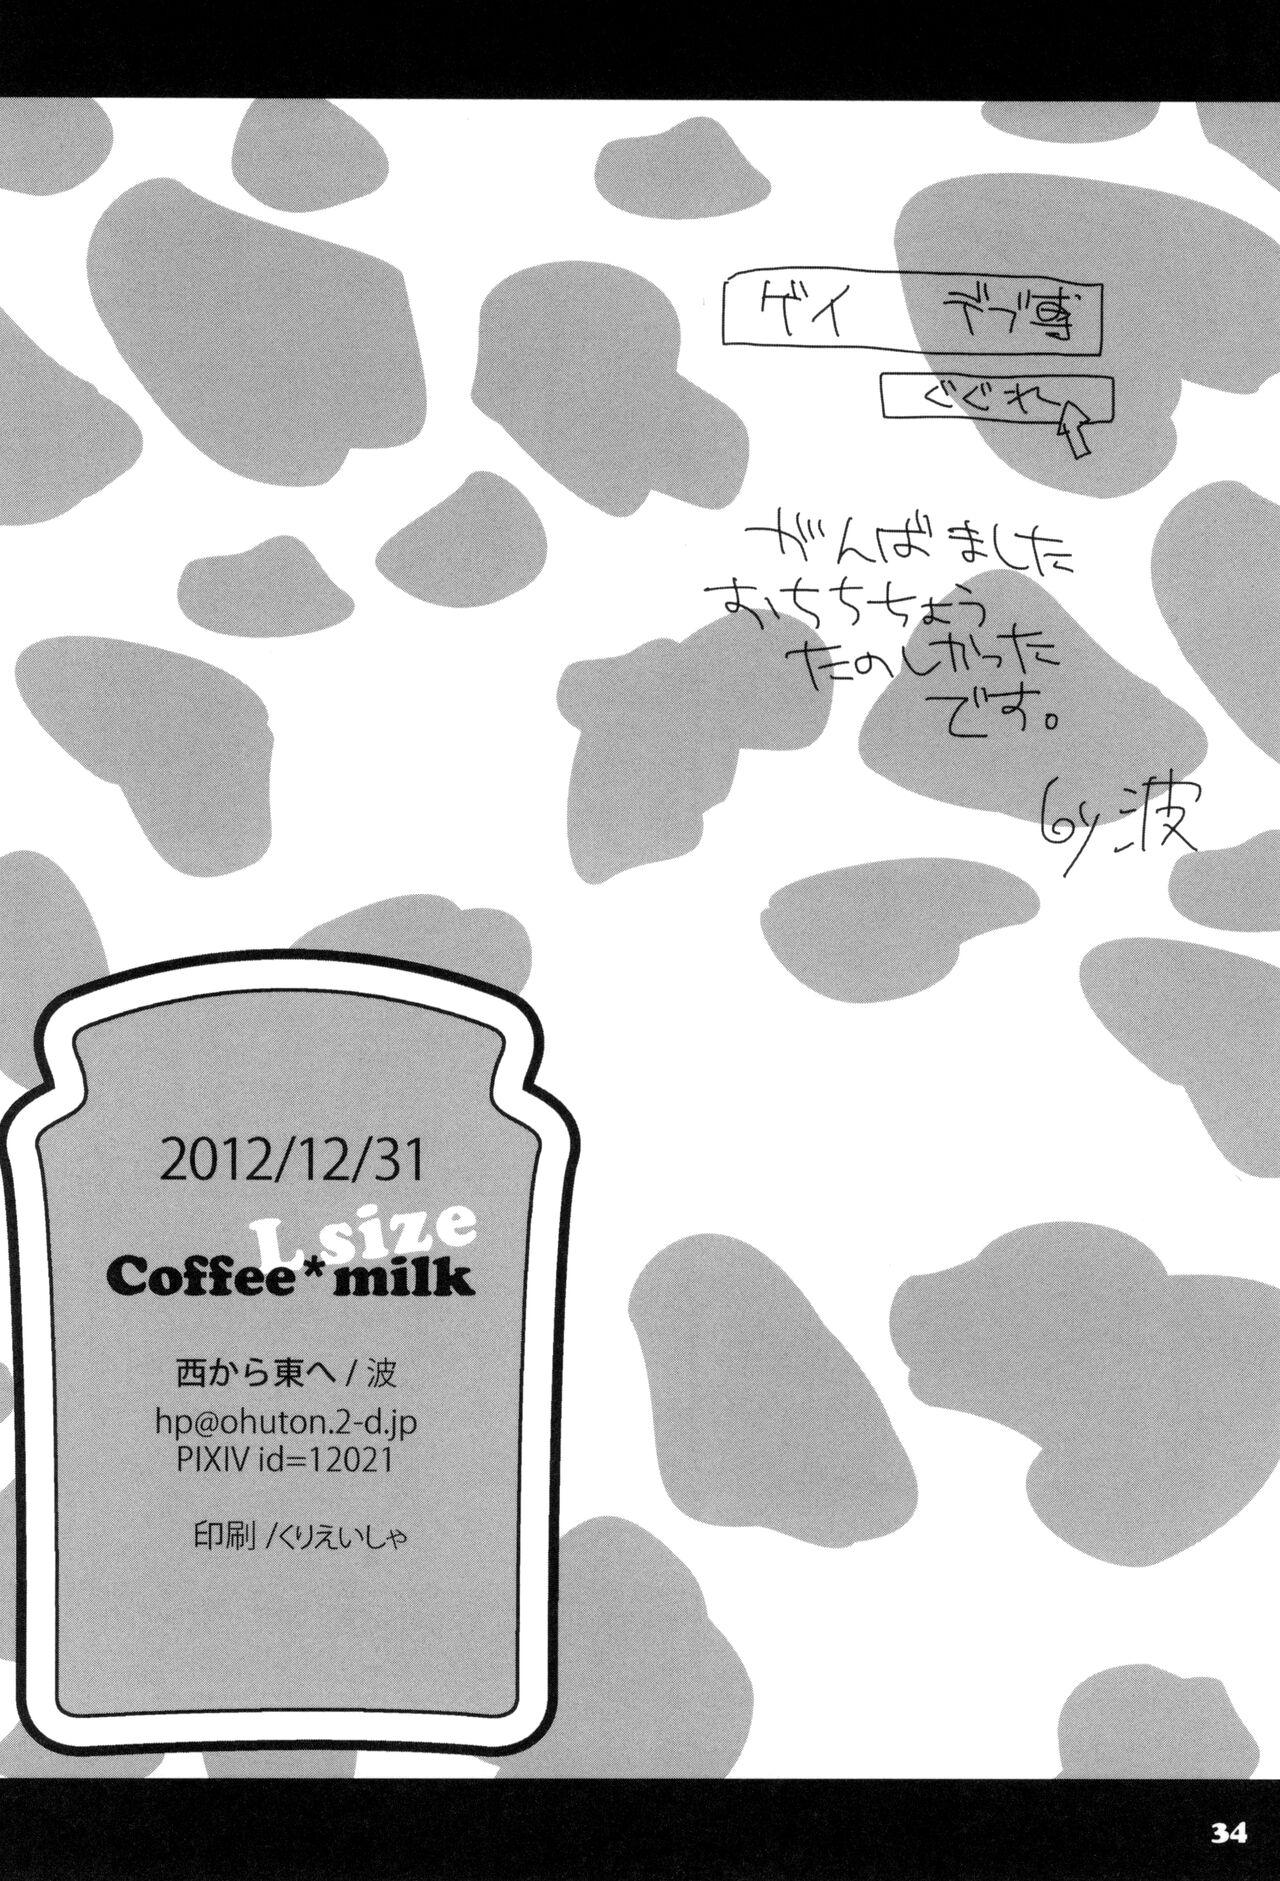 Coffee*milk 37